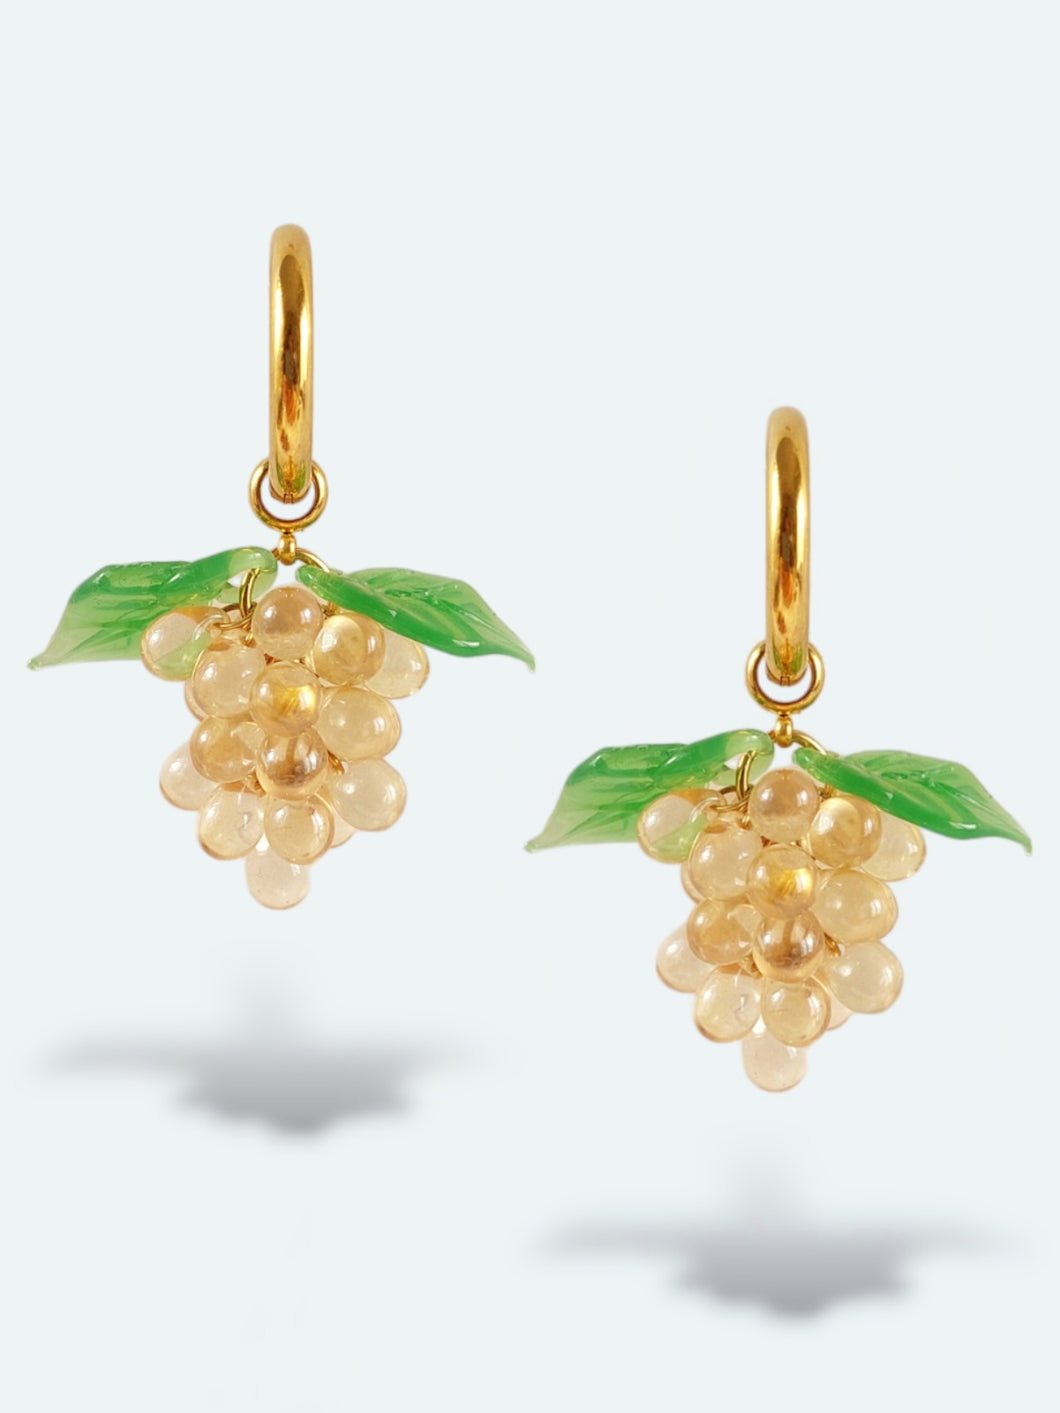 Handmade gold hoop earrings with grape charm made of beige glass drops.